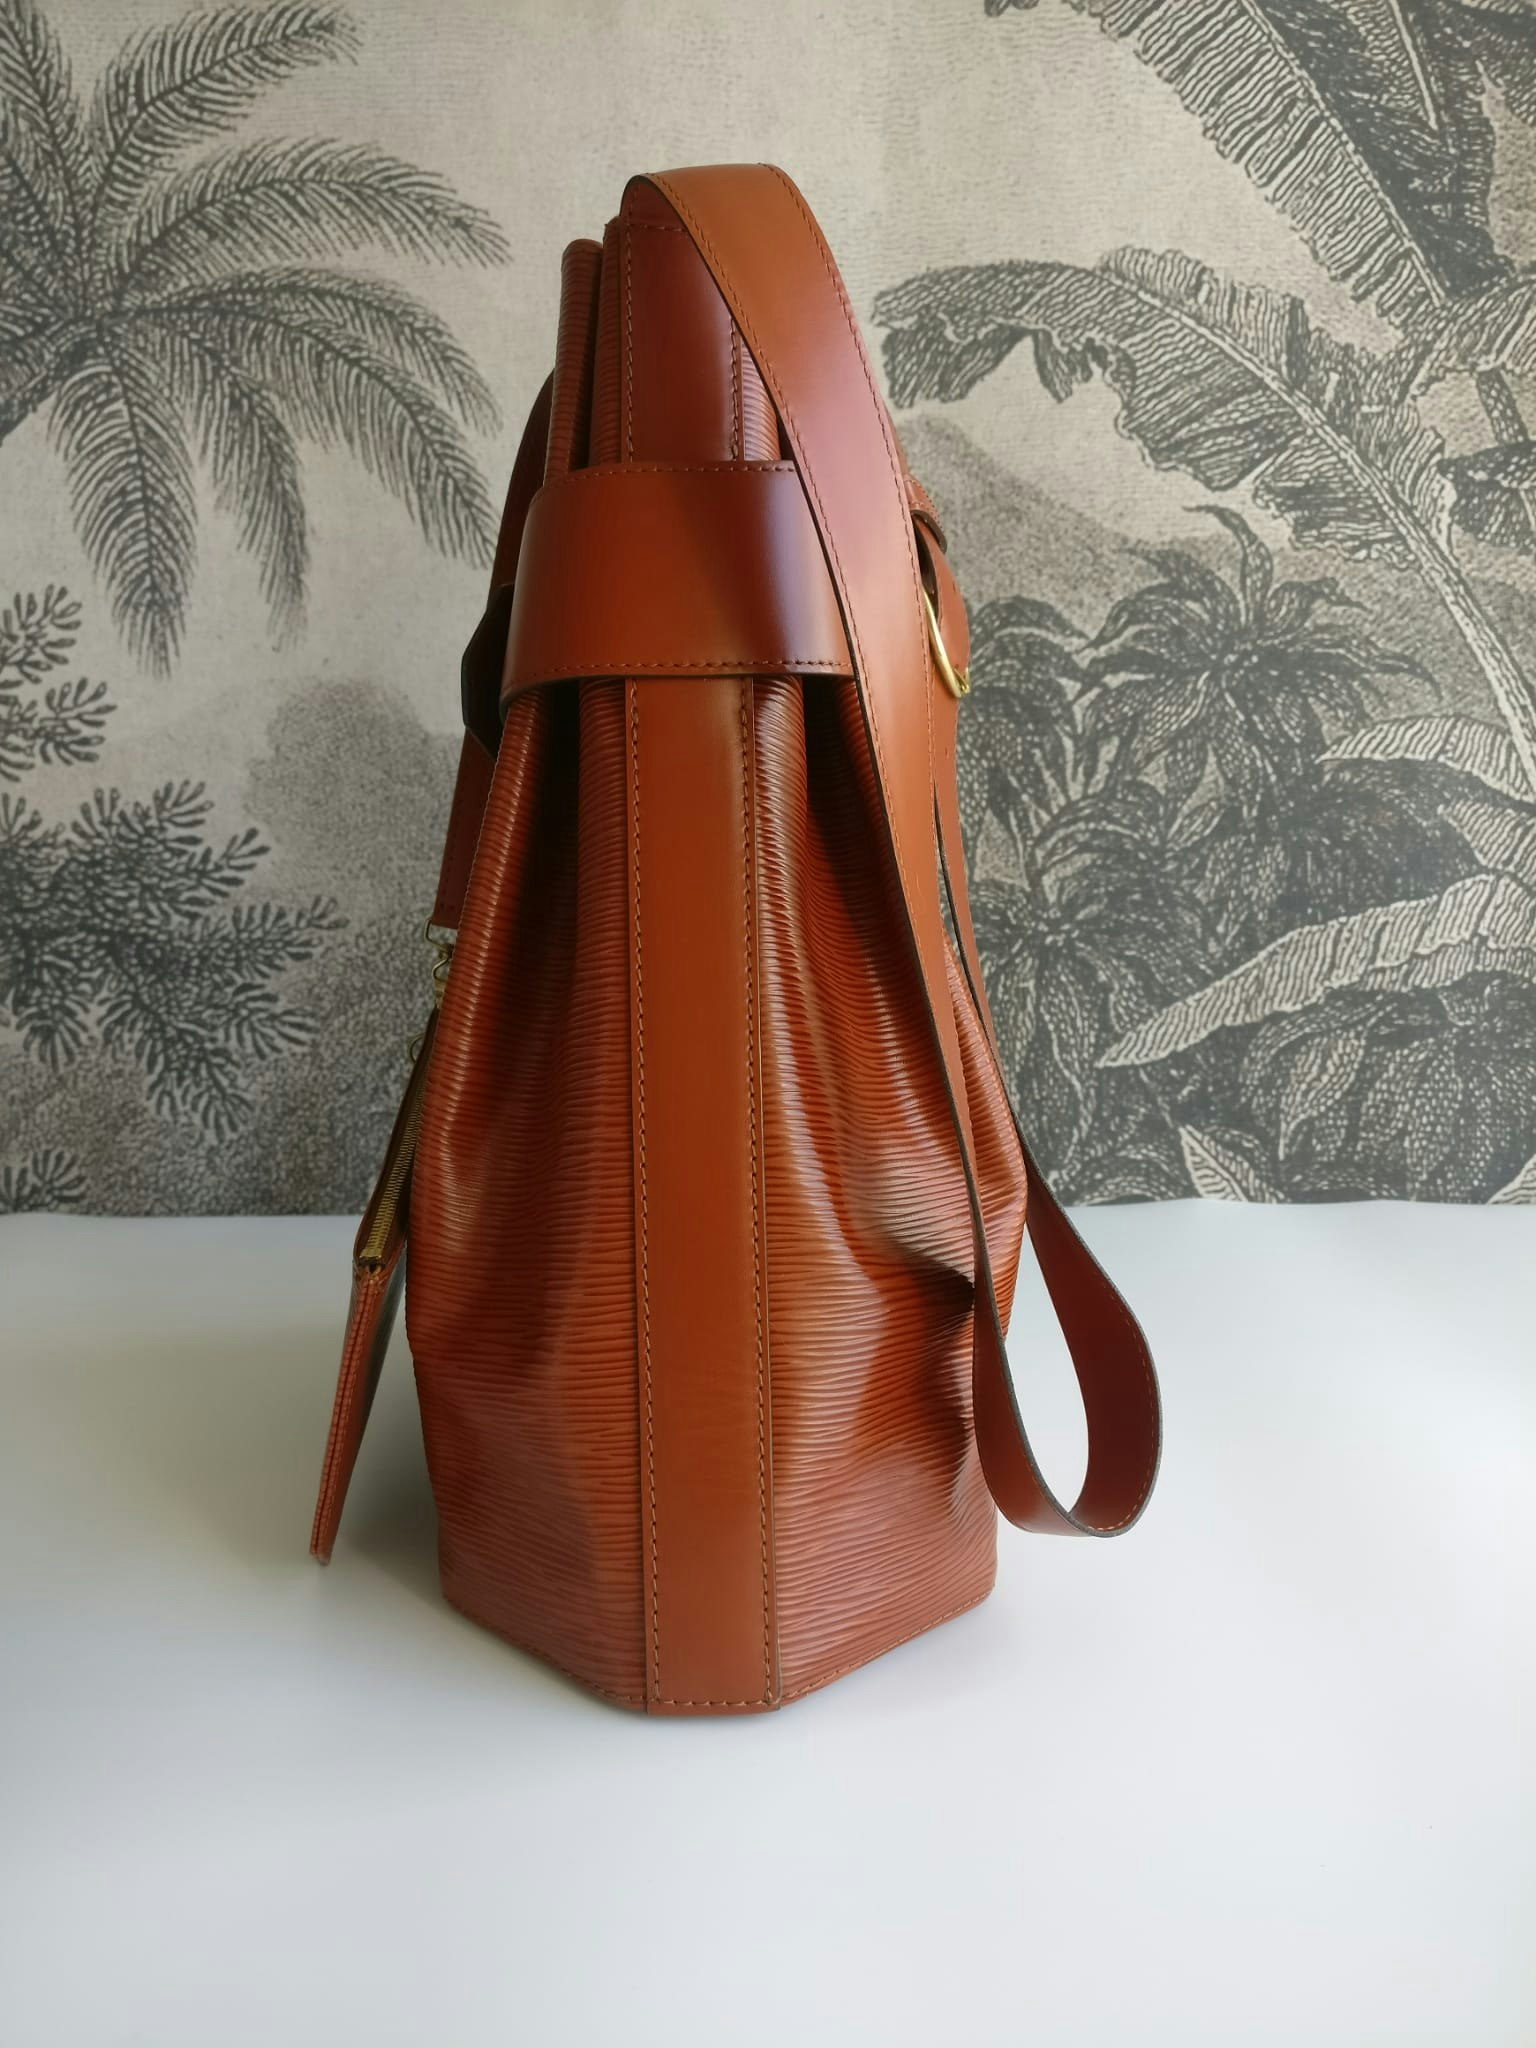 Louis Vuitton Sac D'Epaule - Good or Bag